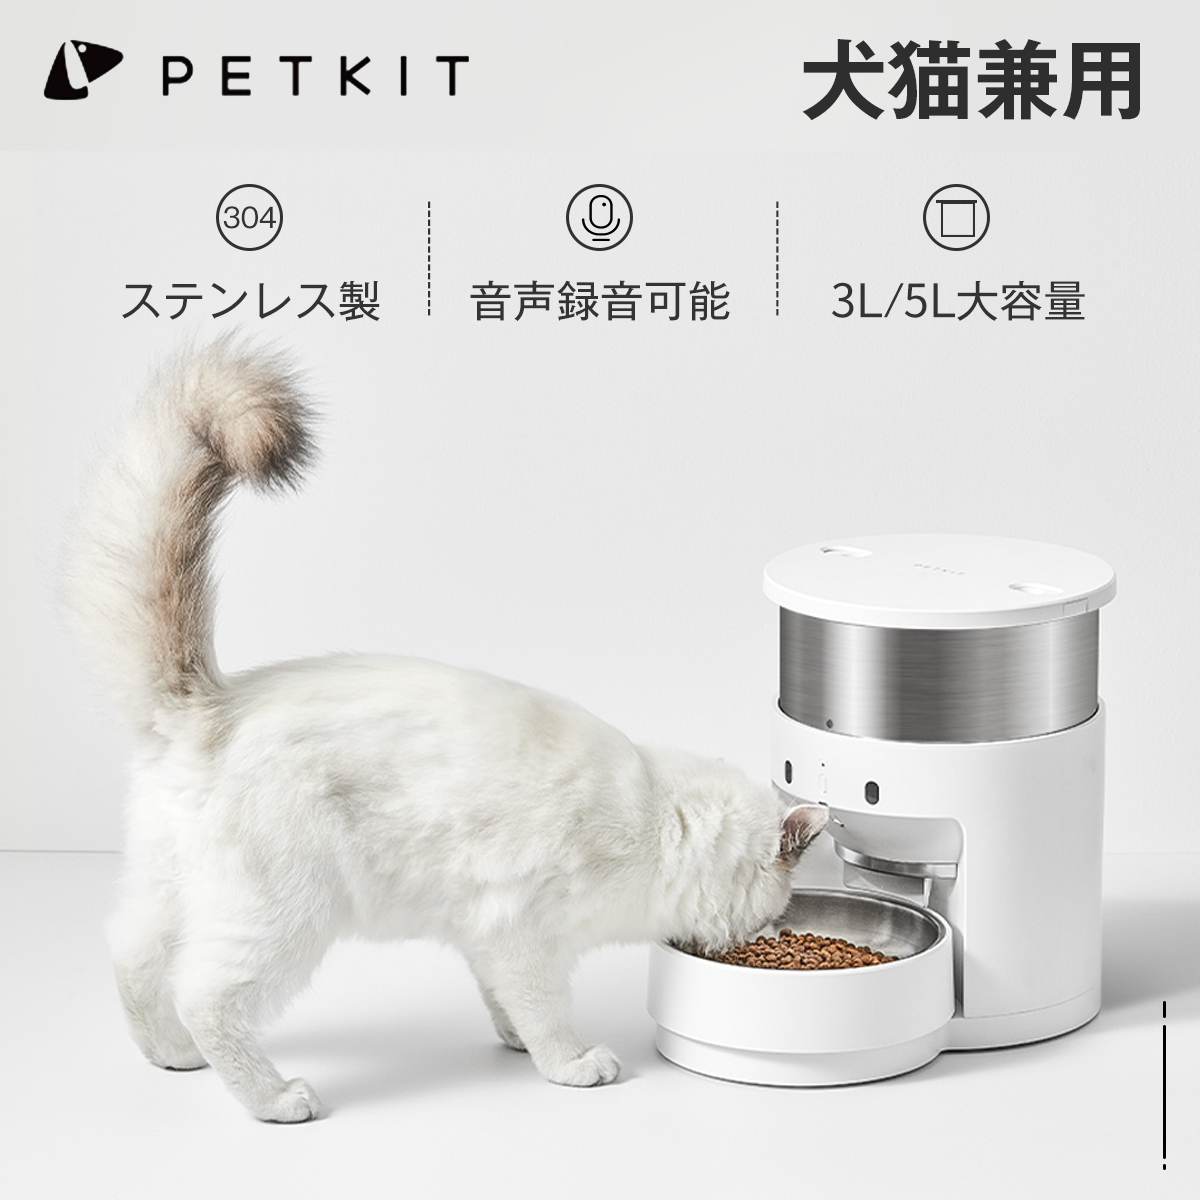 新品未開封 PETKIT 自動給餌器 猫 犬用 タイマー式 アプリ対応 2.8L-